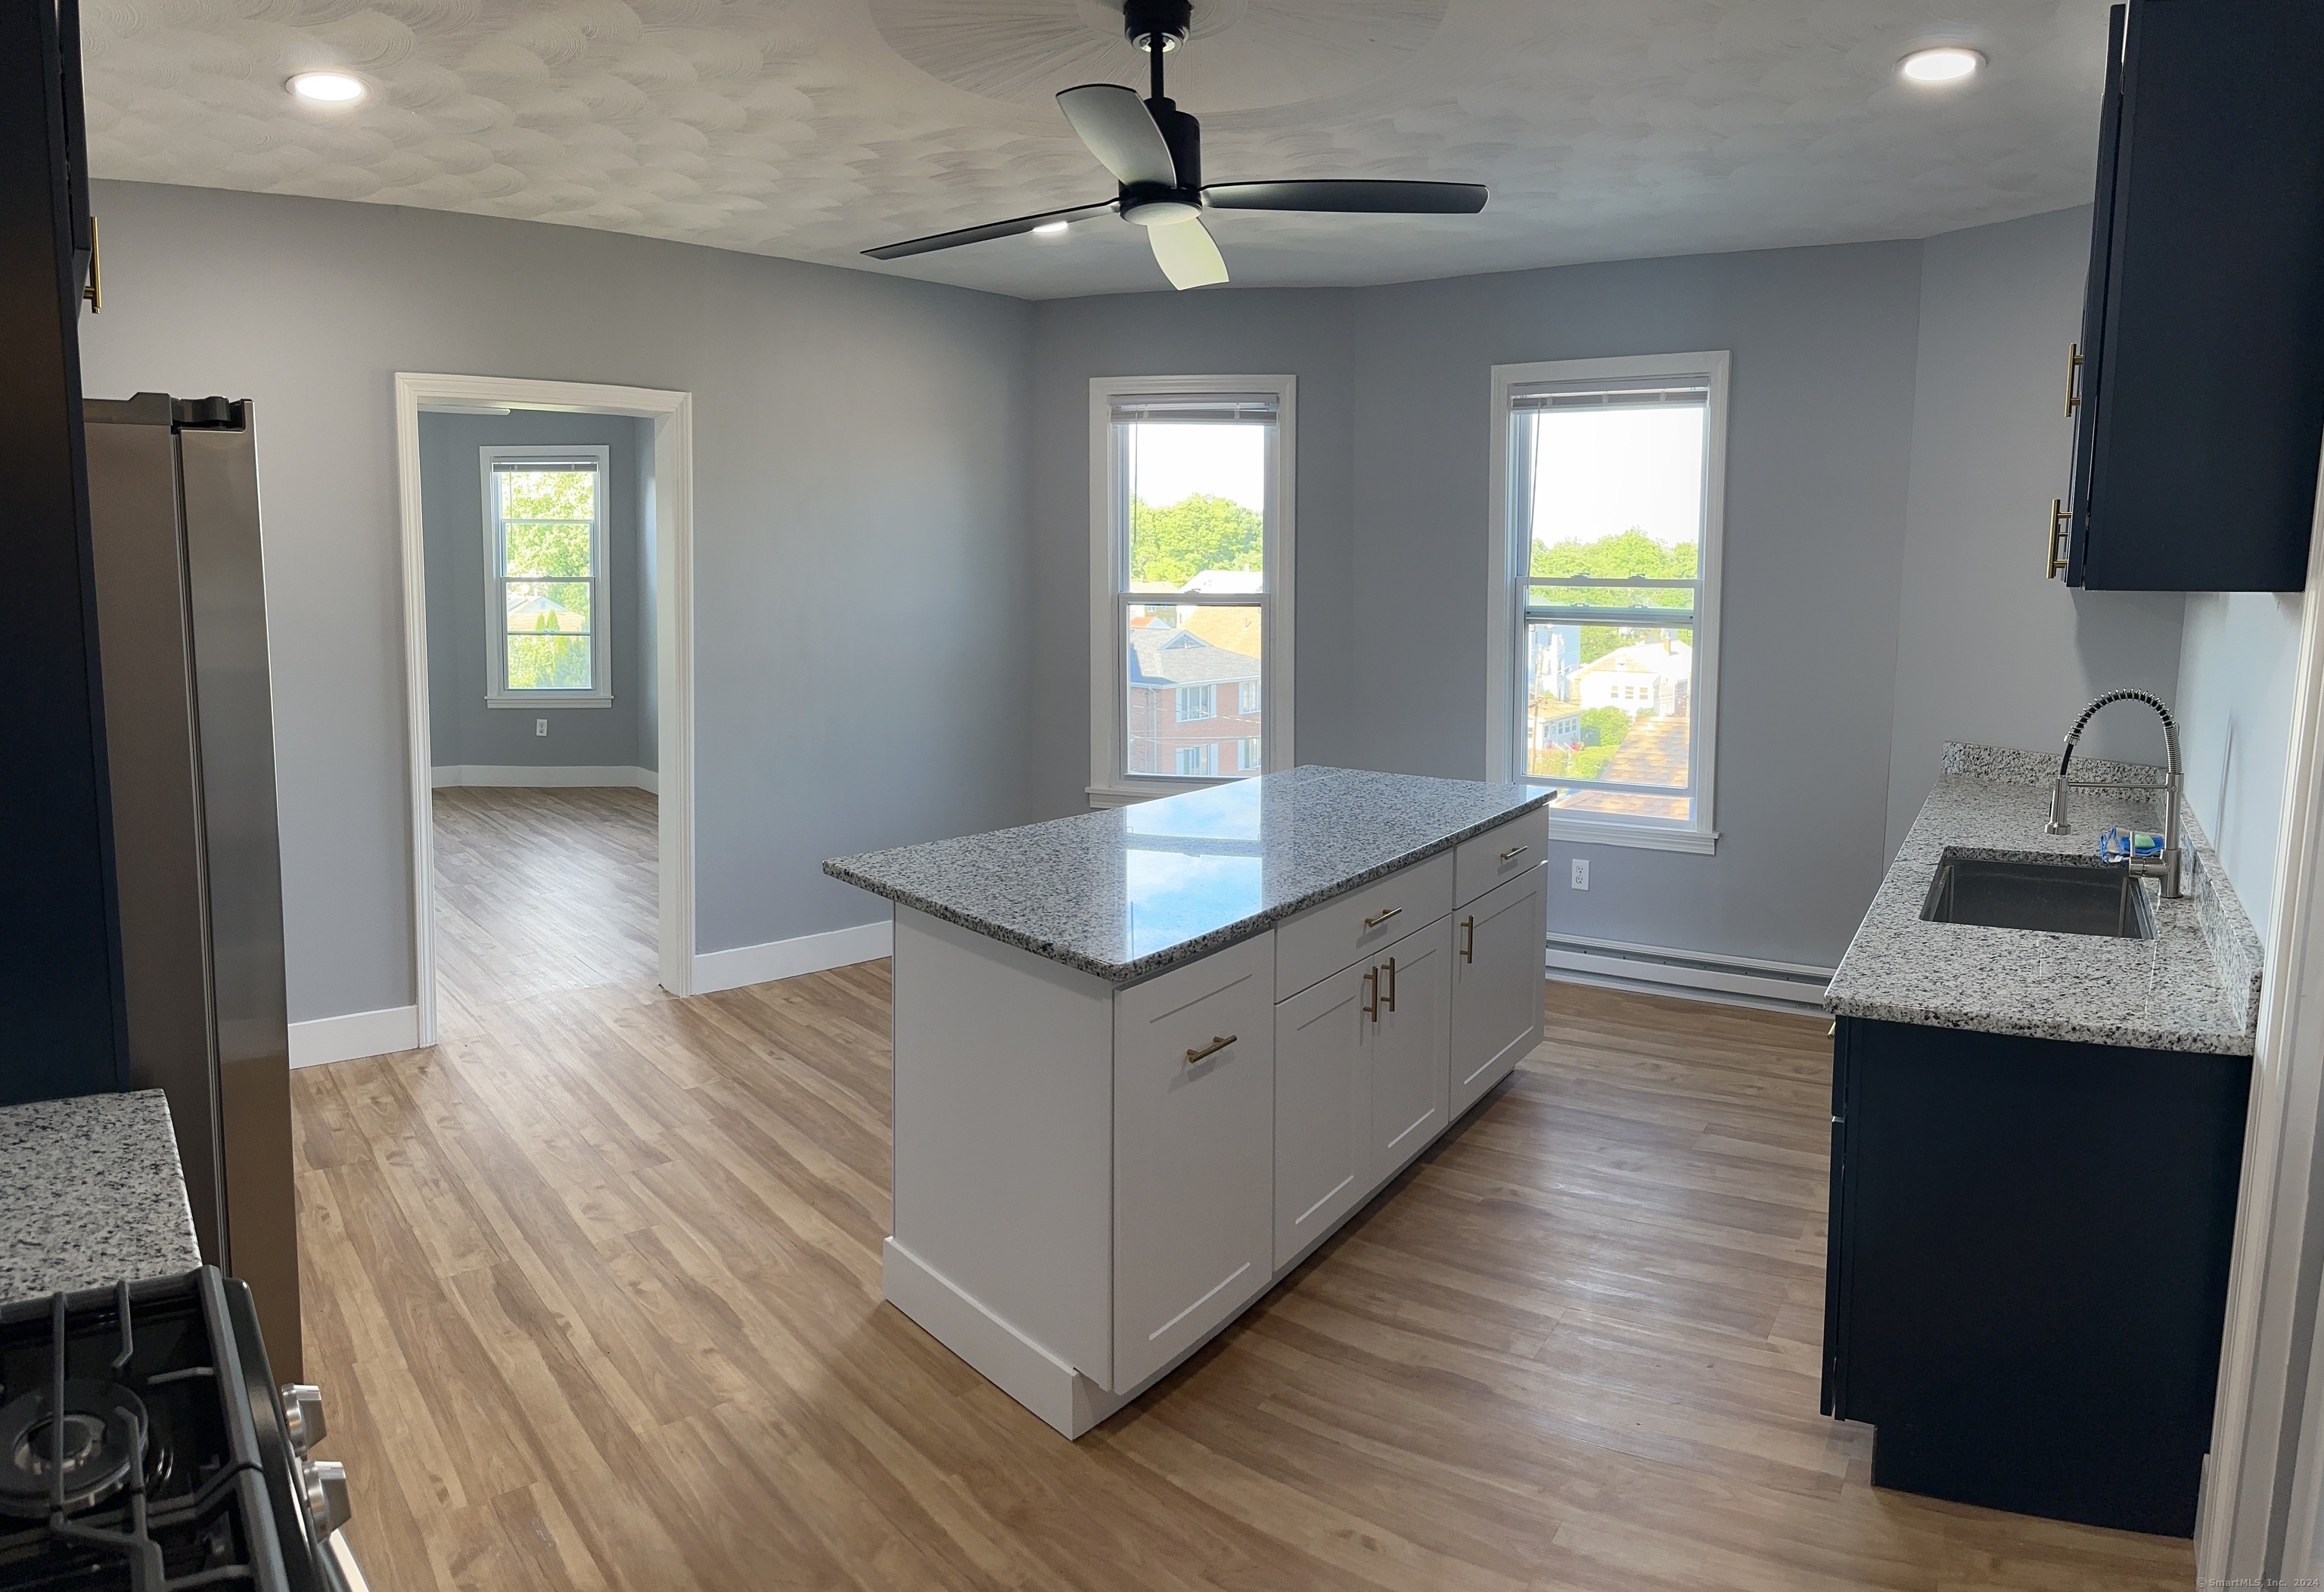 Rental Property at 40 Pulaski Street, New Britain, Connecticut - Bedrooms: 2 
Bathrooms: 1 
Rooms: 4  - $1,800 MO.